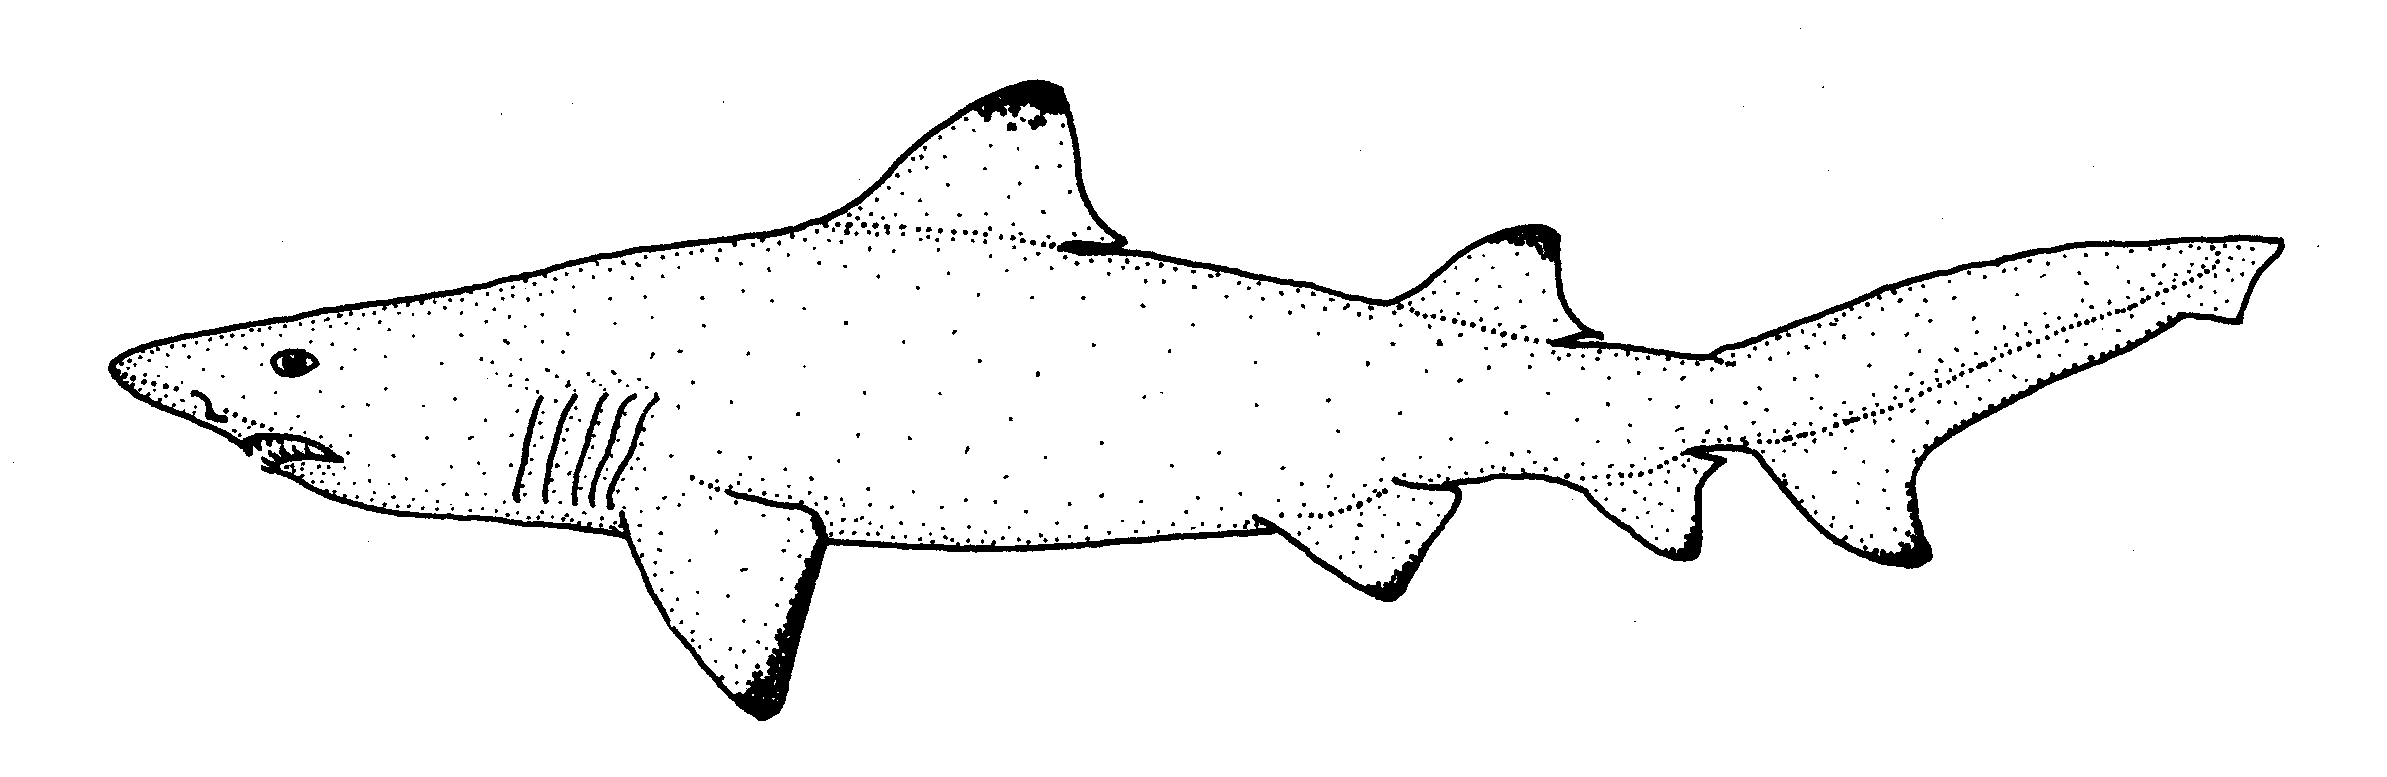  Requin féroce